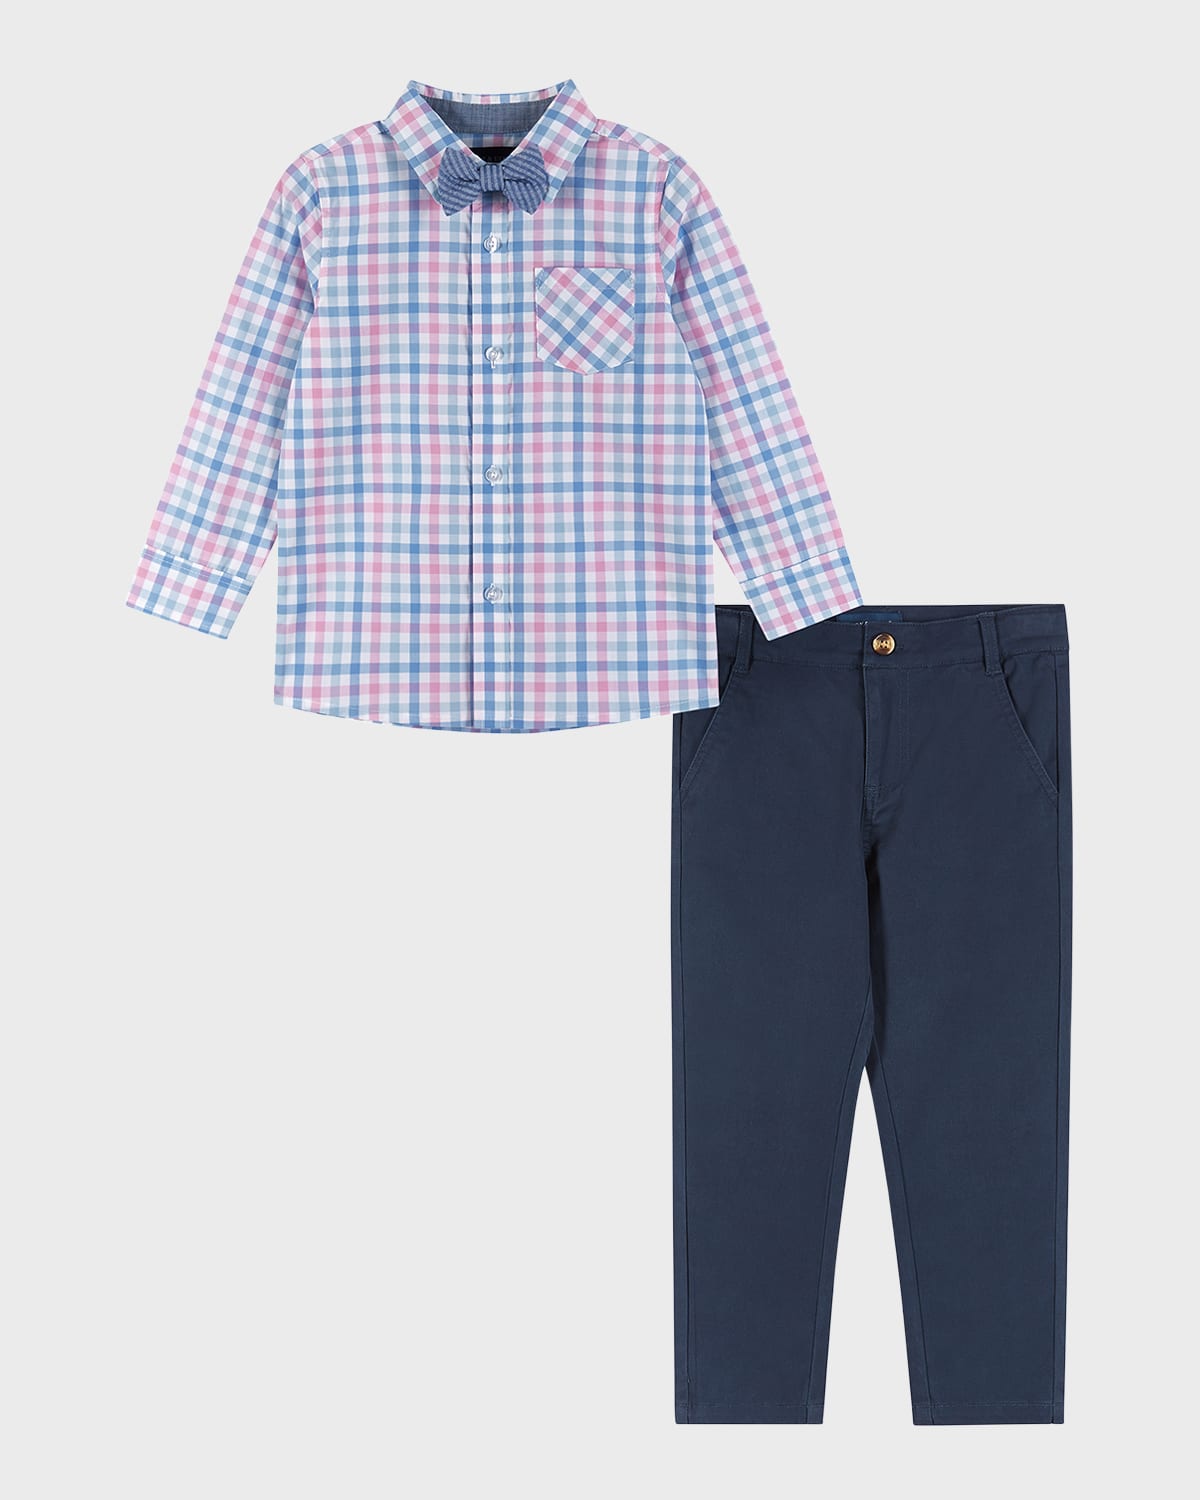 Andy & Evan Kids' Boy's Plaid Button Down Shirt W/ Bow Tie & Pants Set In Whiteplaid